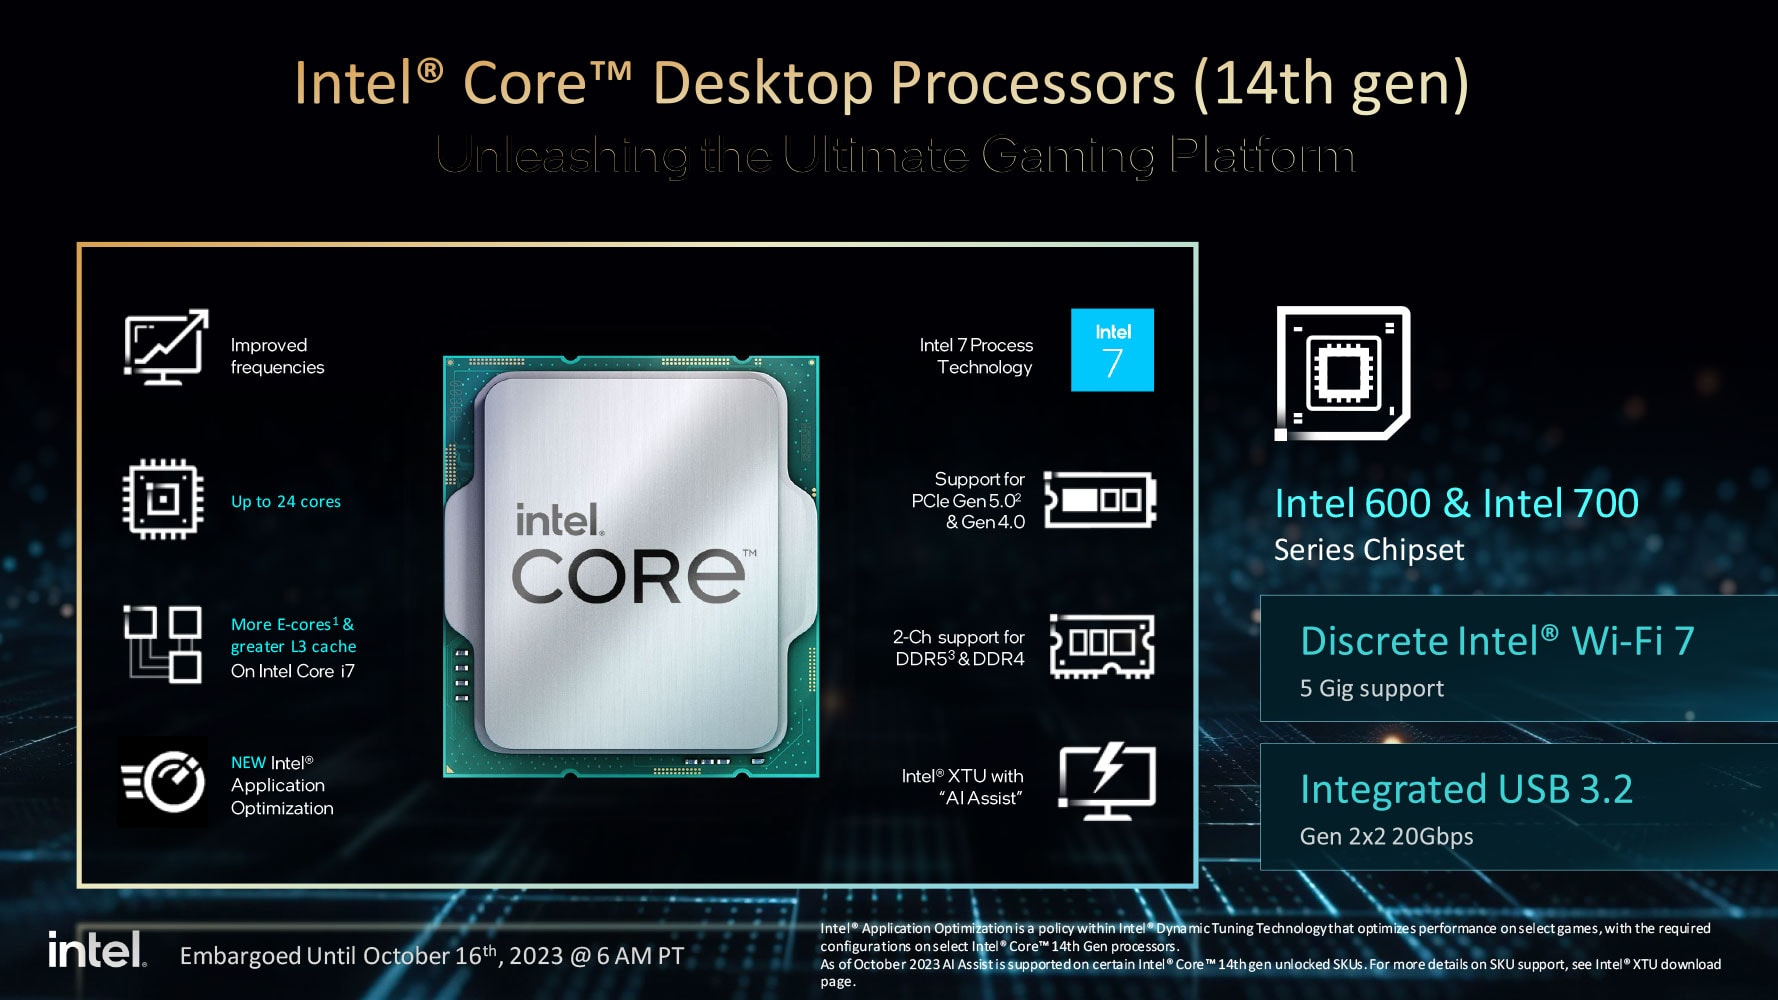 Intel core i5-14600k